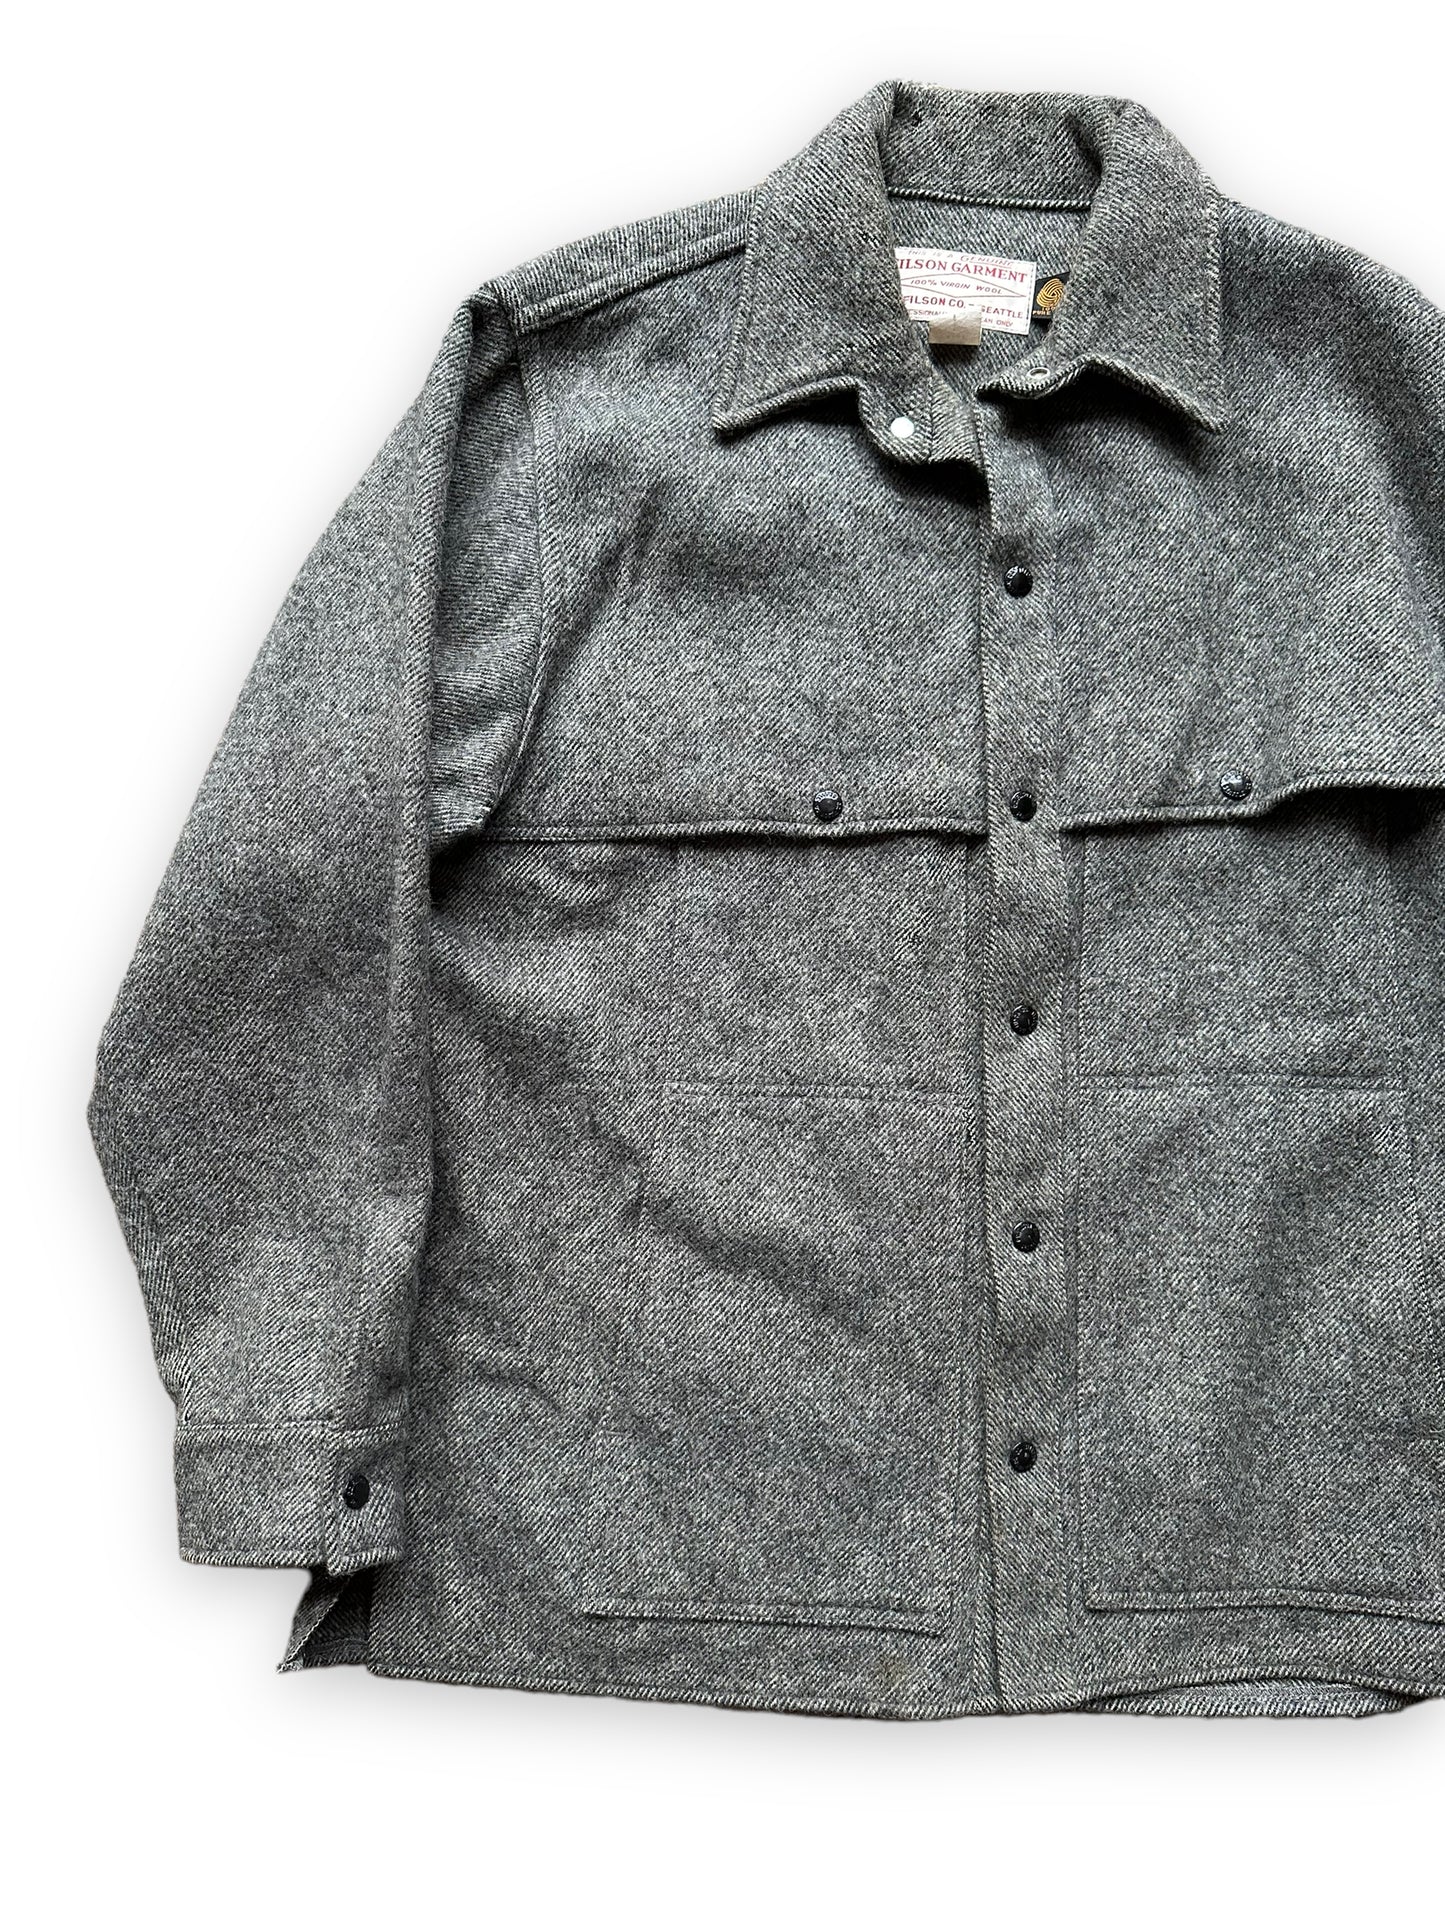 Front Right View of Vintage Filson Grey Herringbone Cape Coat SZ Large  |  Barn Owl Vintage Goods | Vintage Wool Workwear Seattle